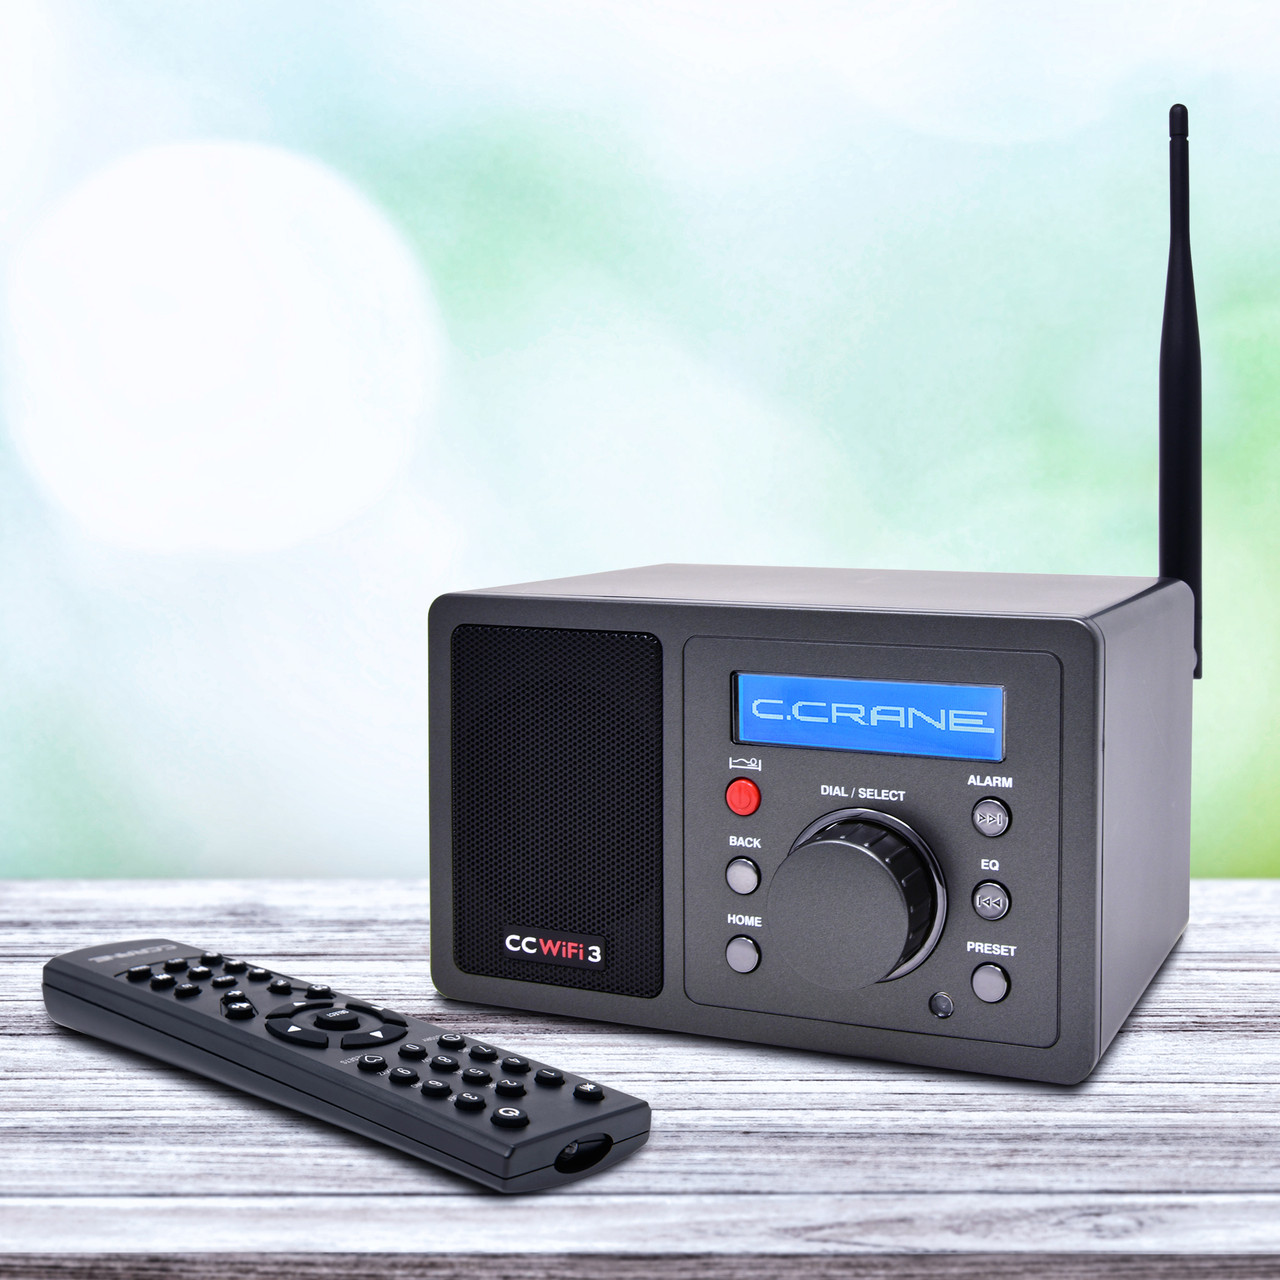 CC WiFi 3 Internet Radio with Skytune and Bluetooth Receiver